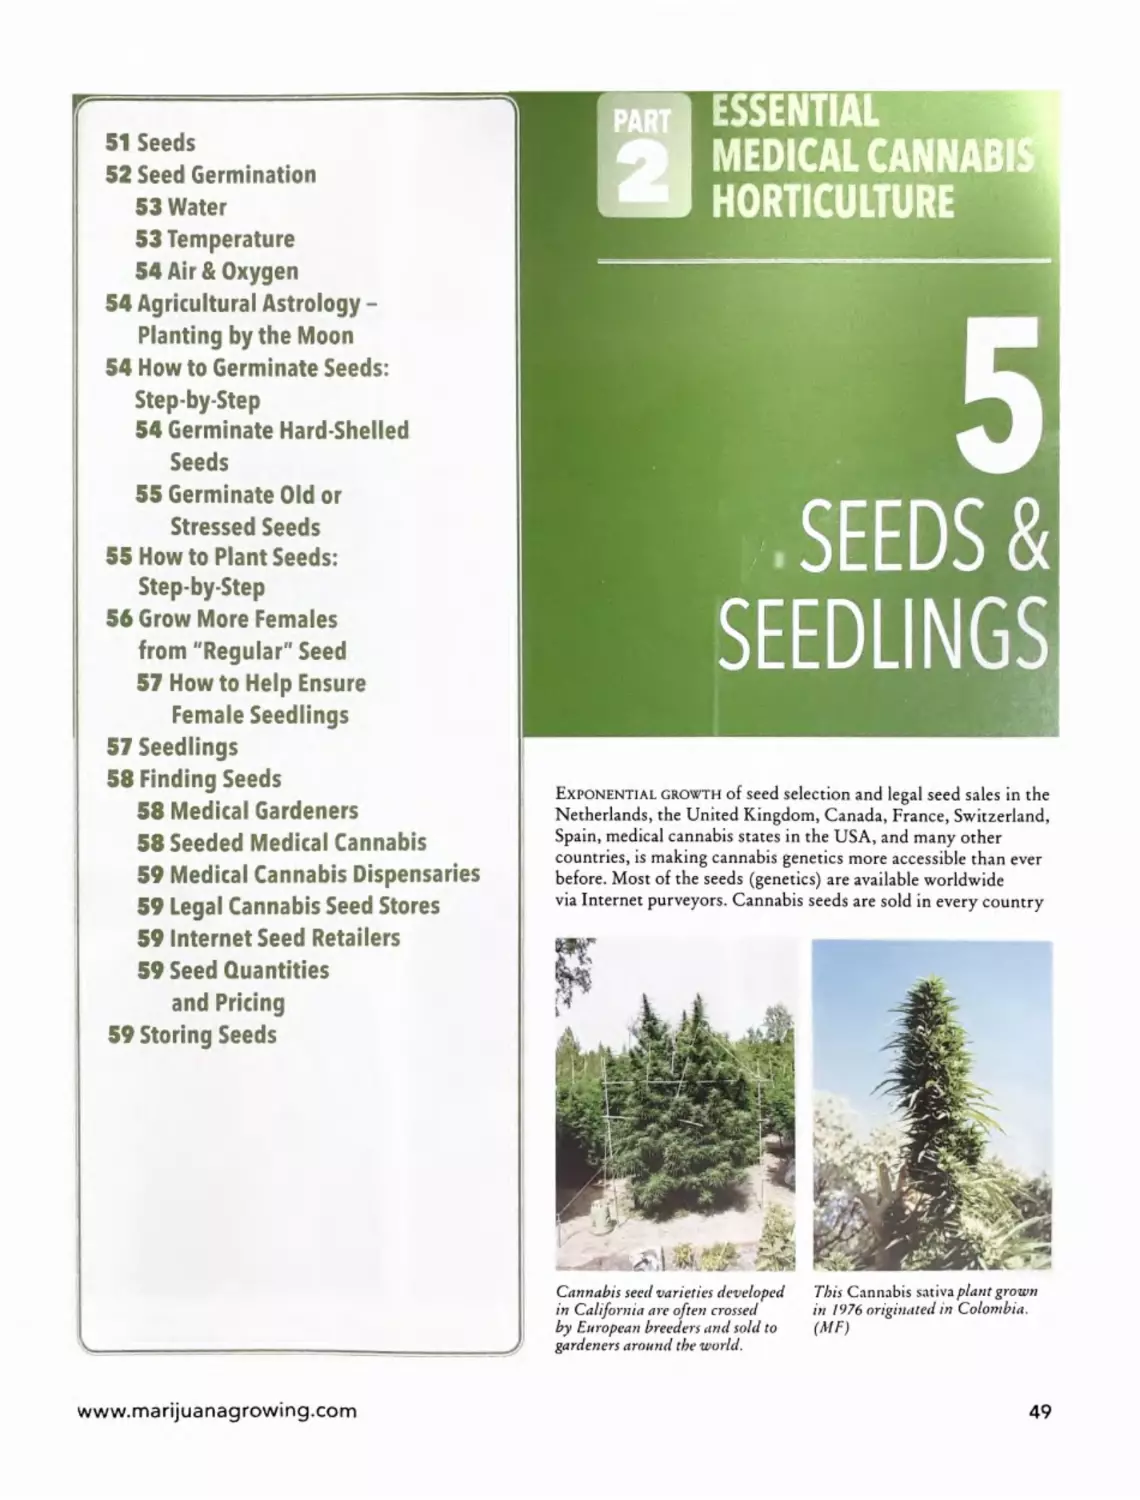 Chapter 5 - Seeds & Seedlings